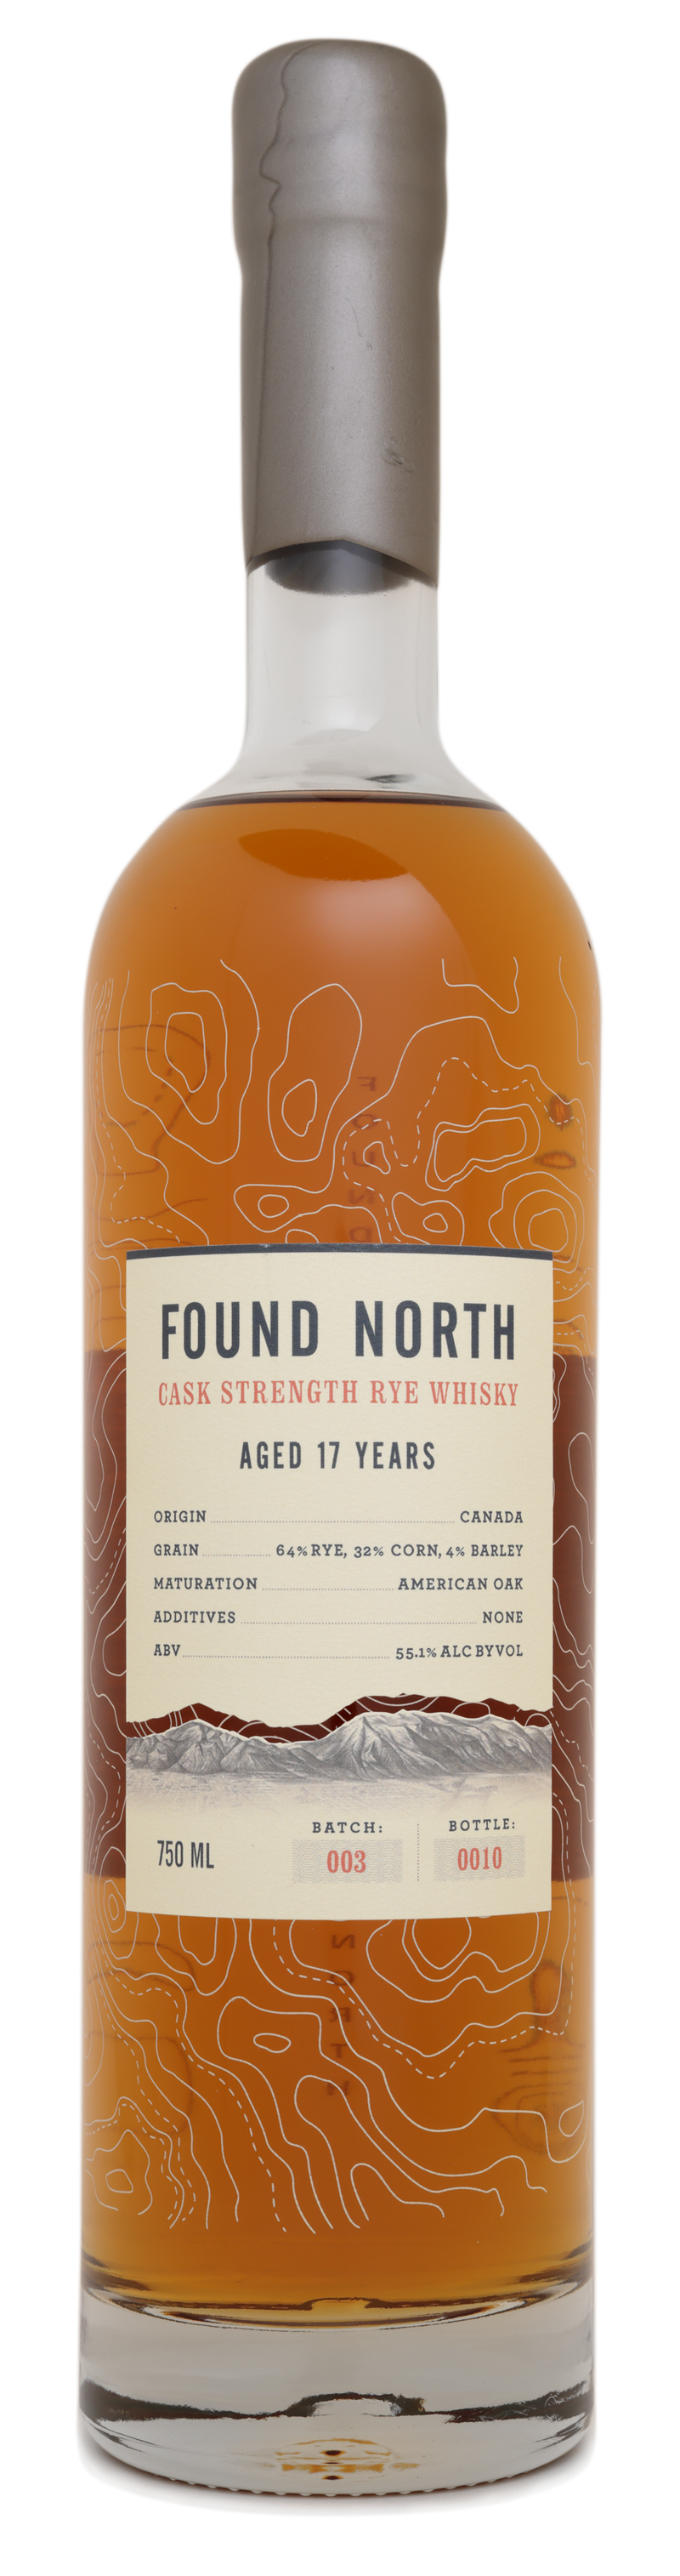 Found North Batch 003 Cask Strength Rye Whiskey Aged 17 Years 750ml